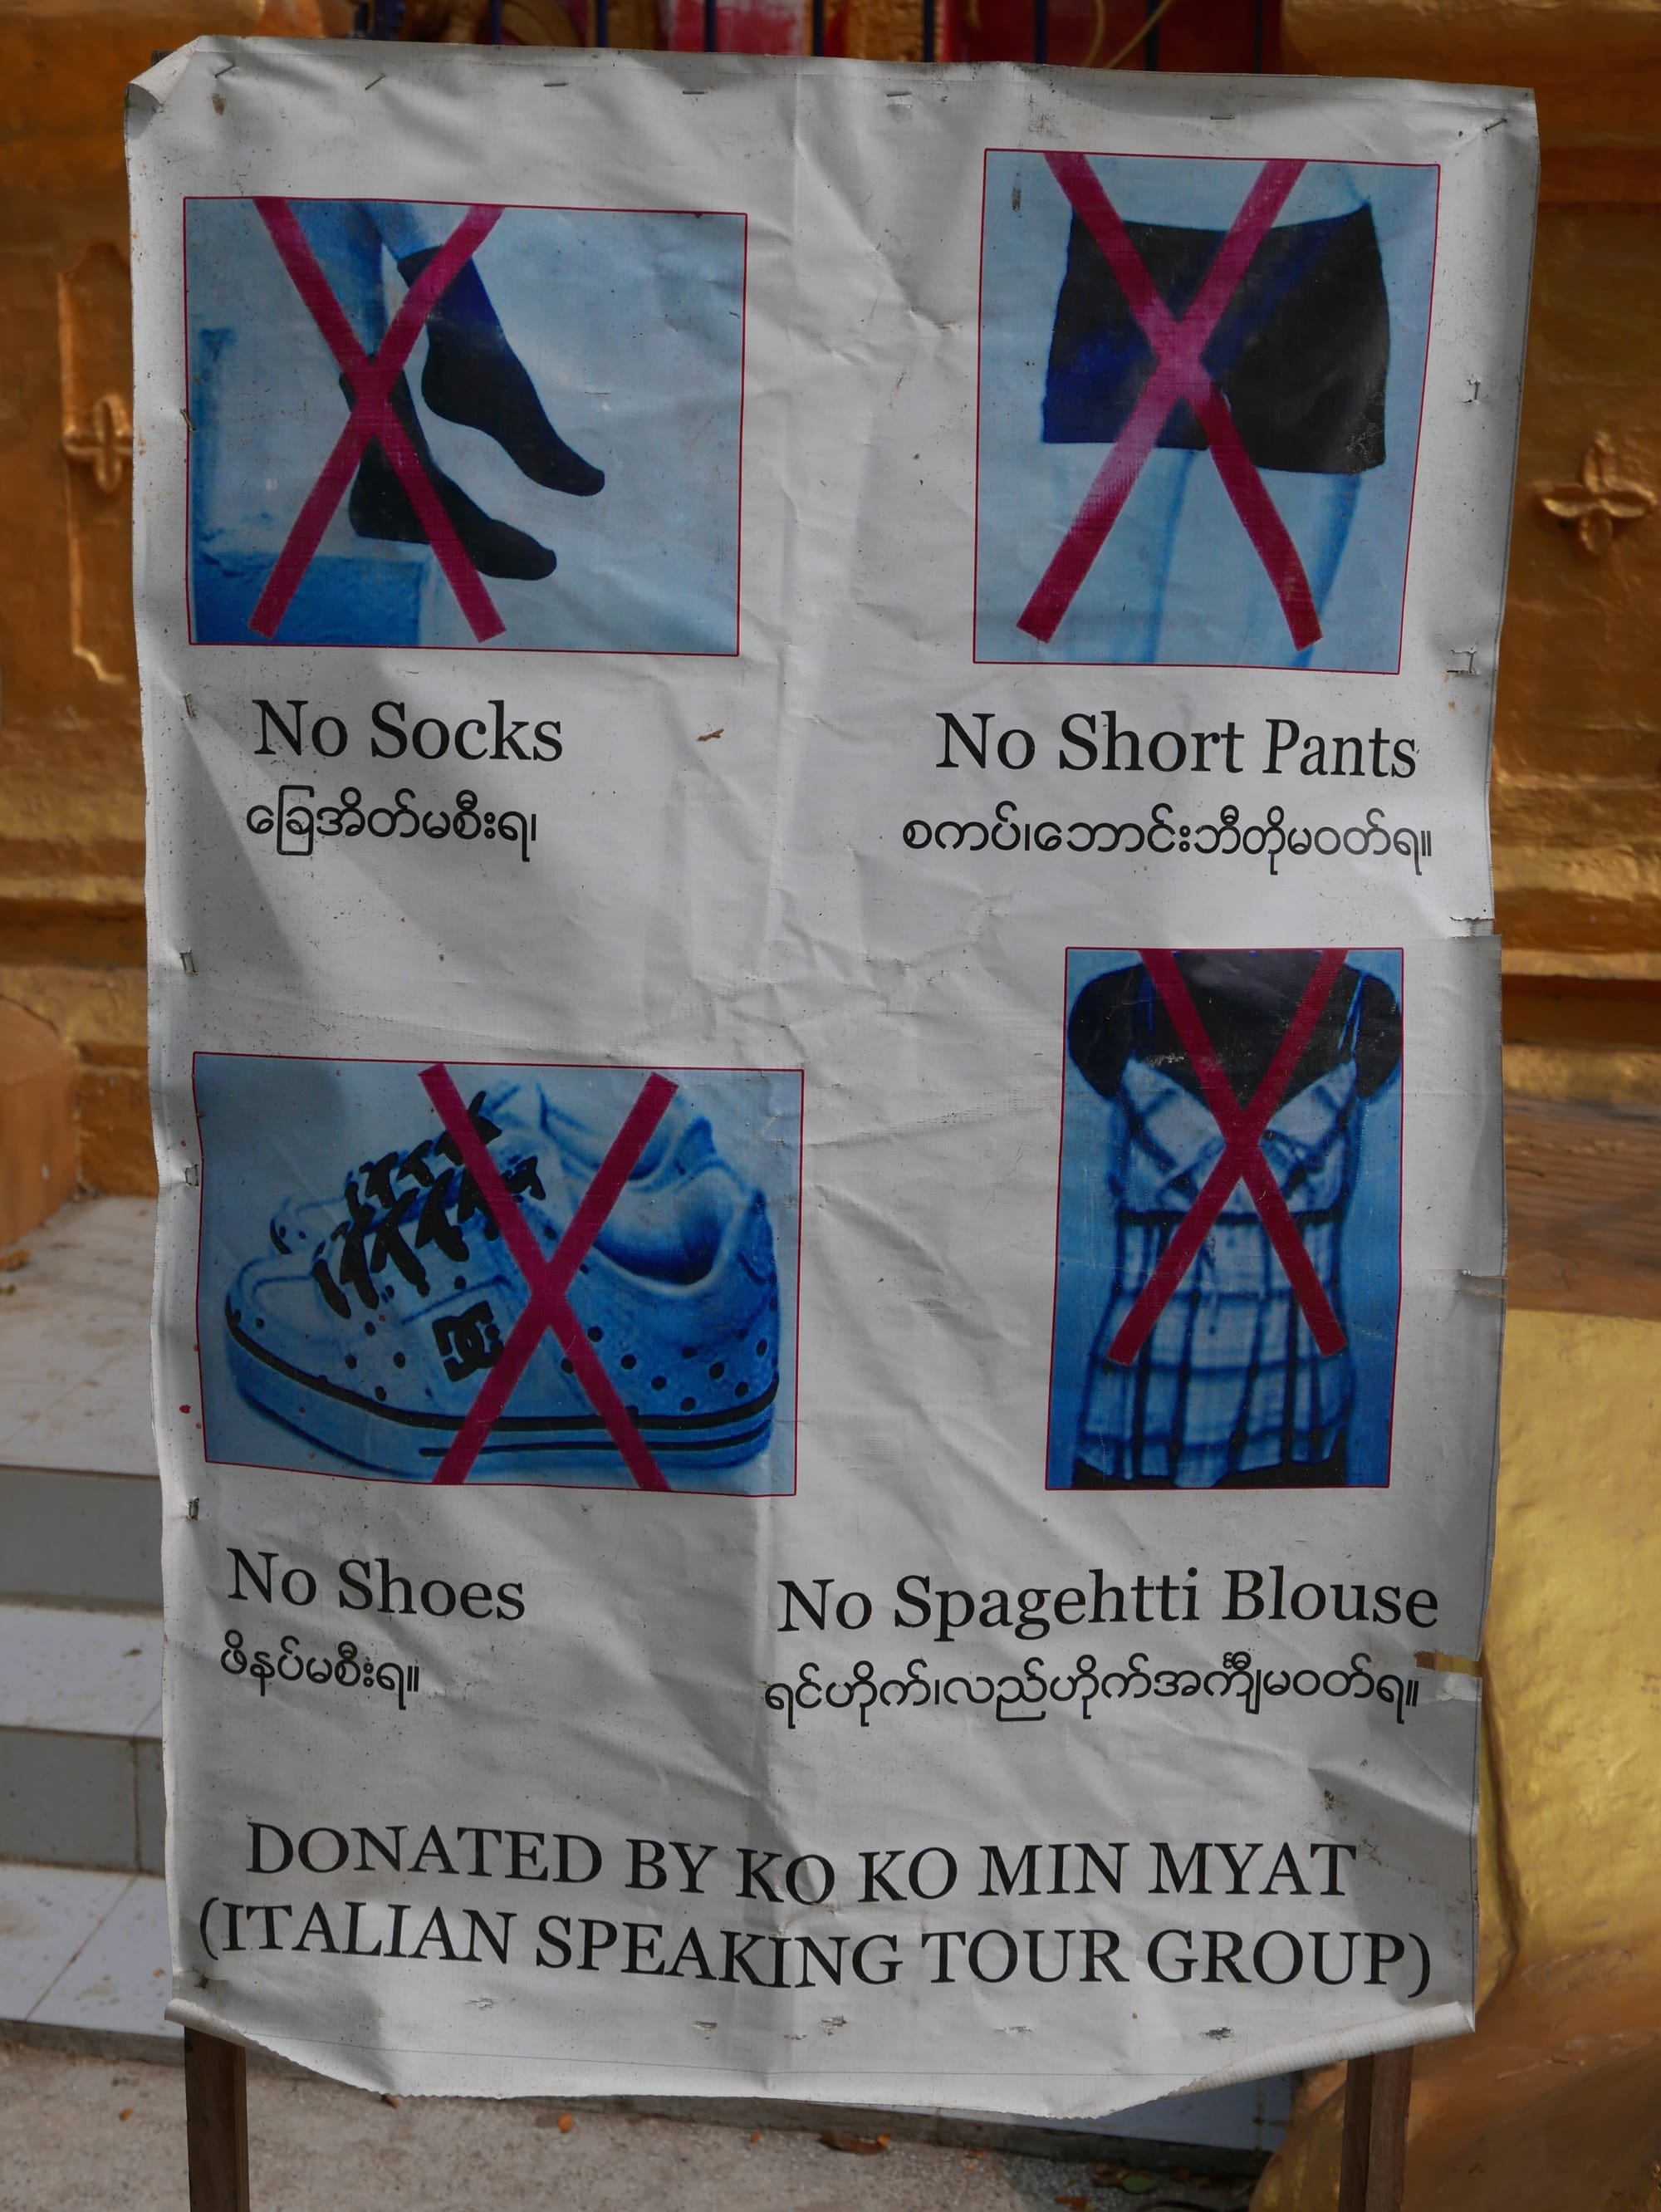 Photo by Author — no shoes or socks at the Maha Lawkamarazein or Kuthodaw Inscription Shrines, Mandalay, Myanmar (Burma)